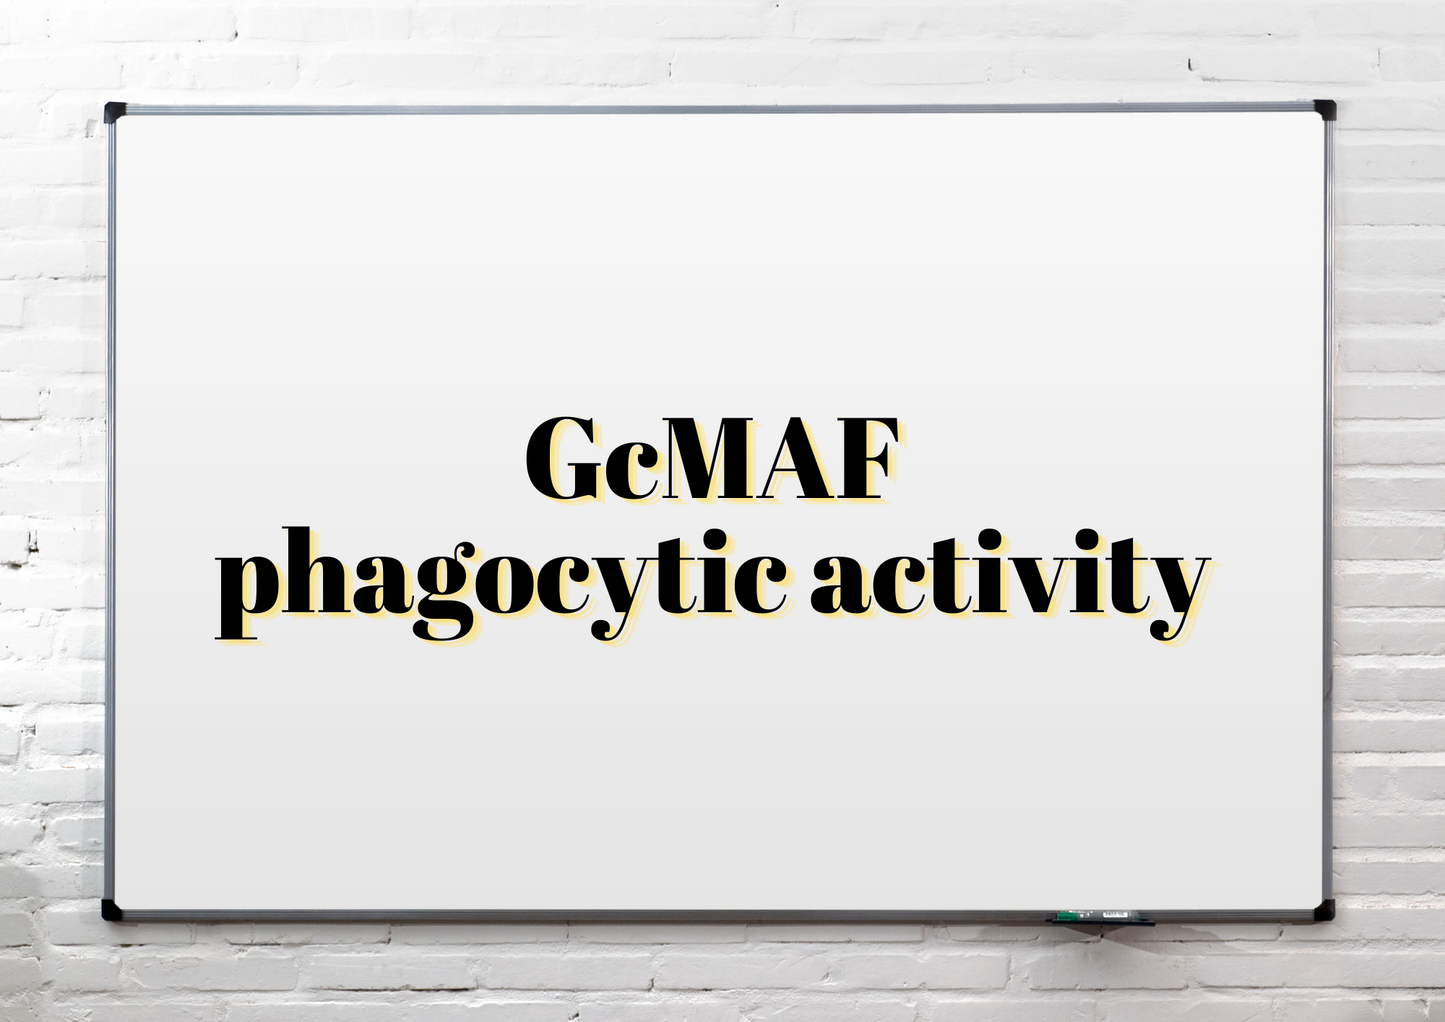 GcMAF phagocytic activity